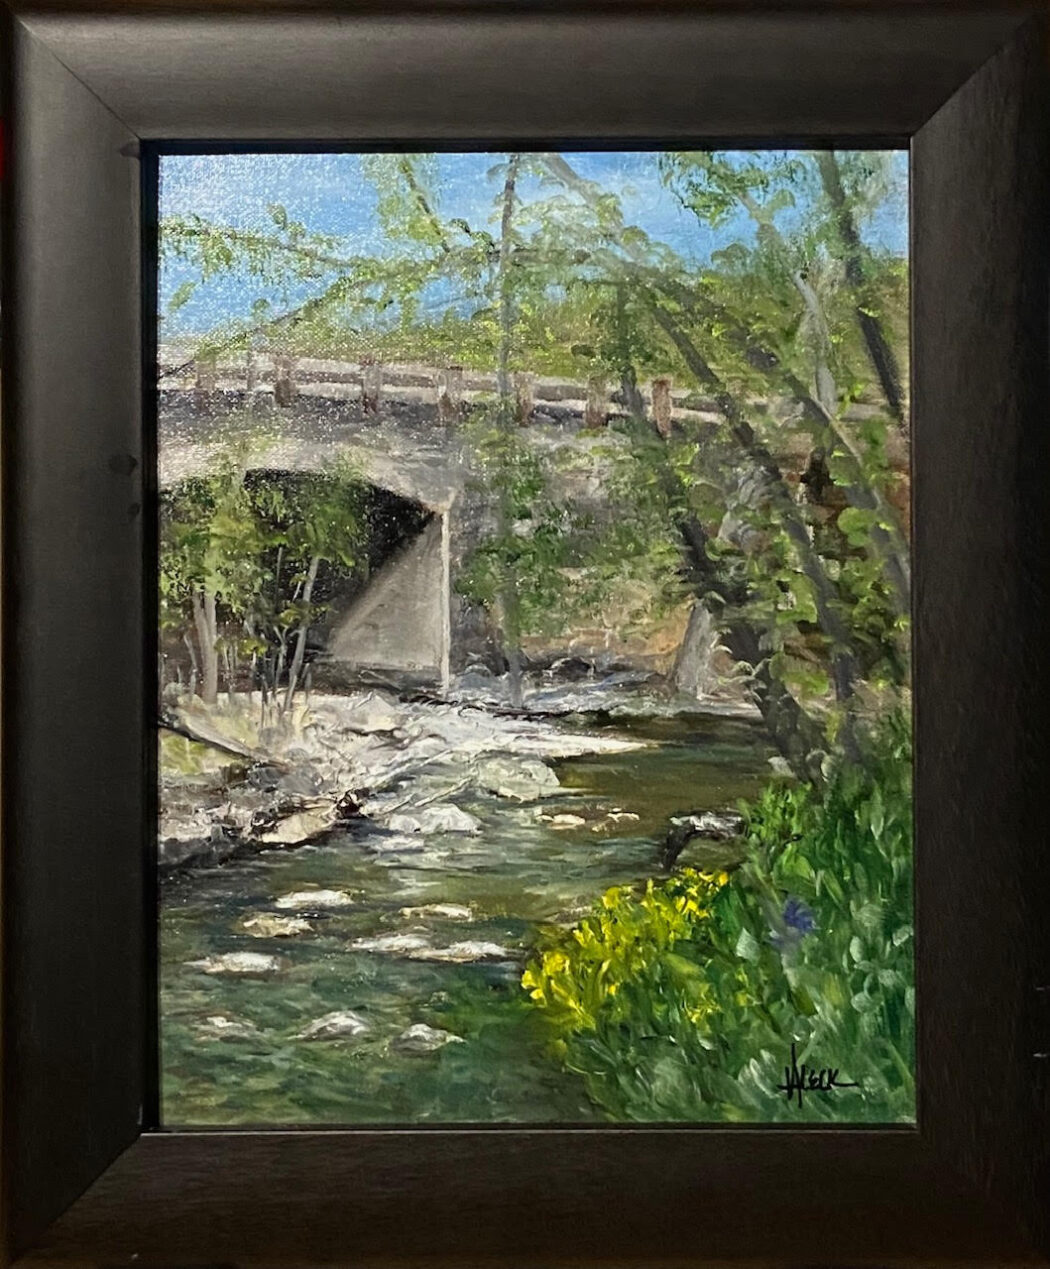 205 - McCormick Bridge - 14x11 - Landscape - $275